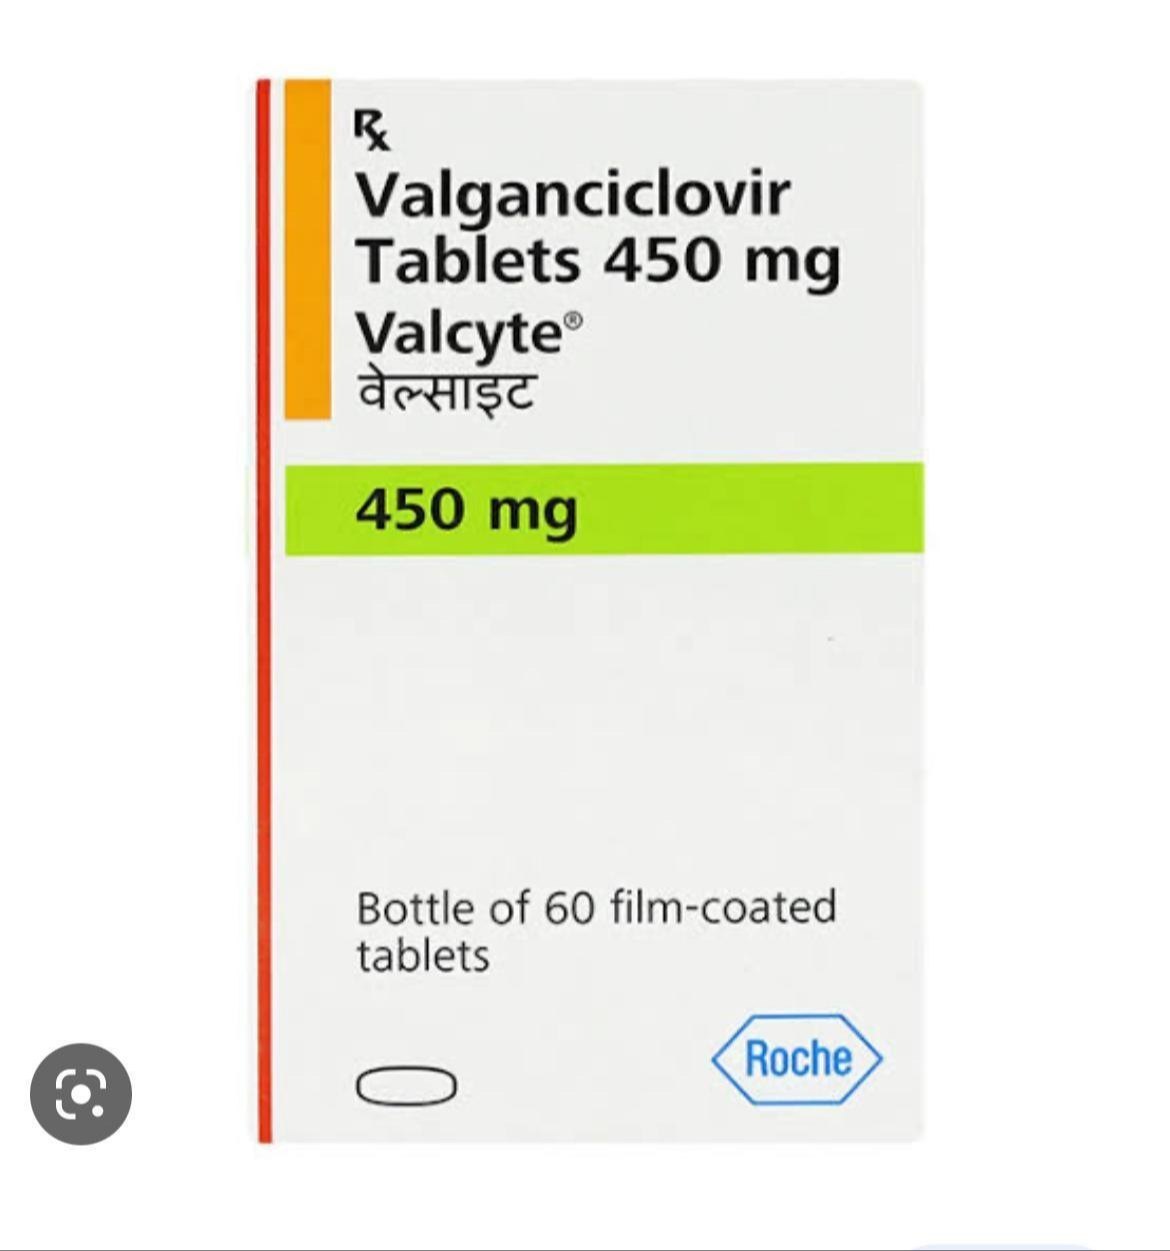 valganciclovir 450 mg